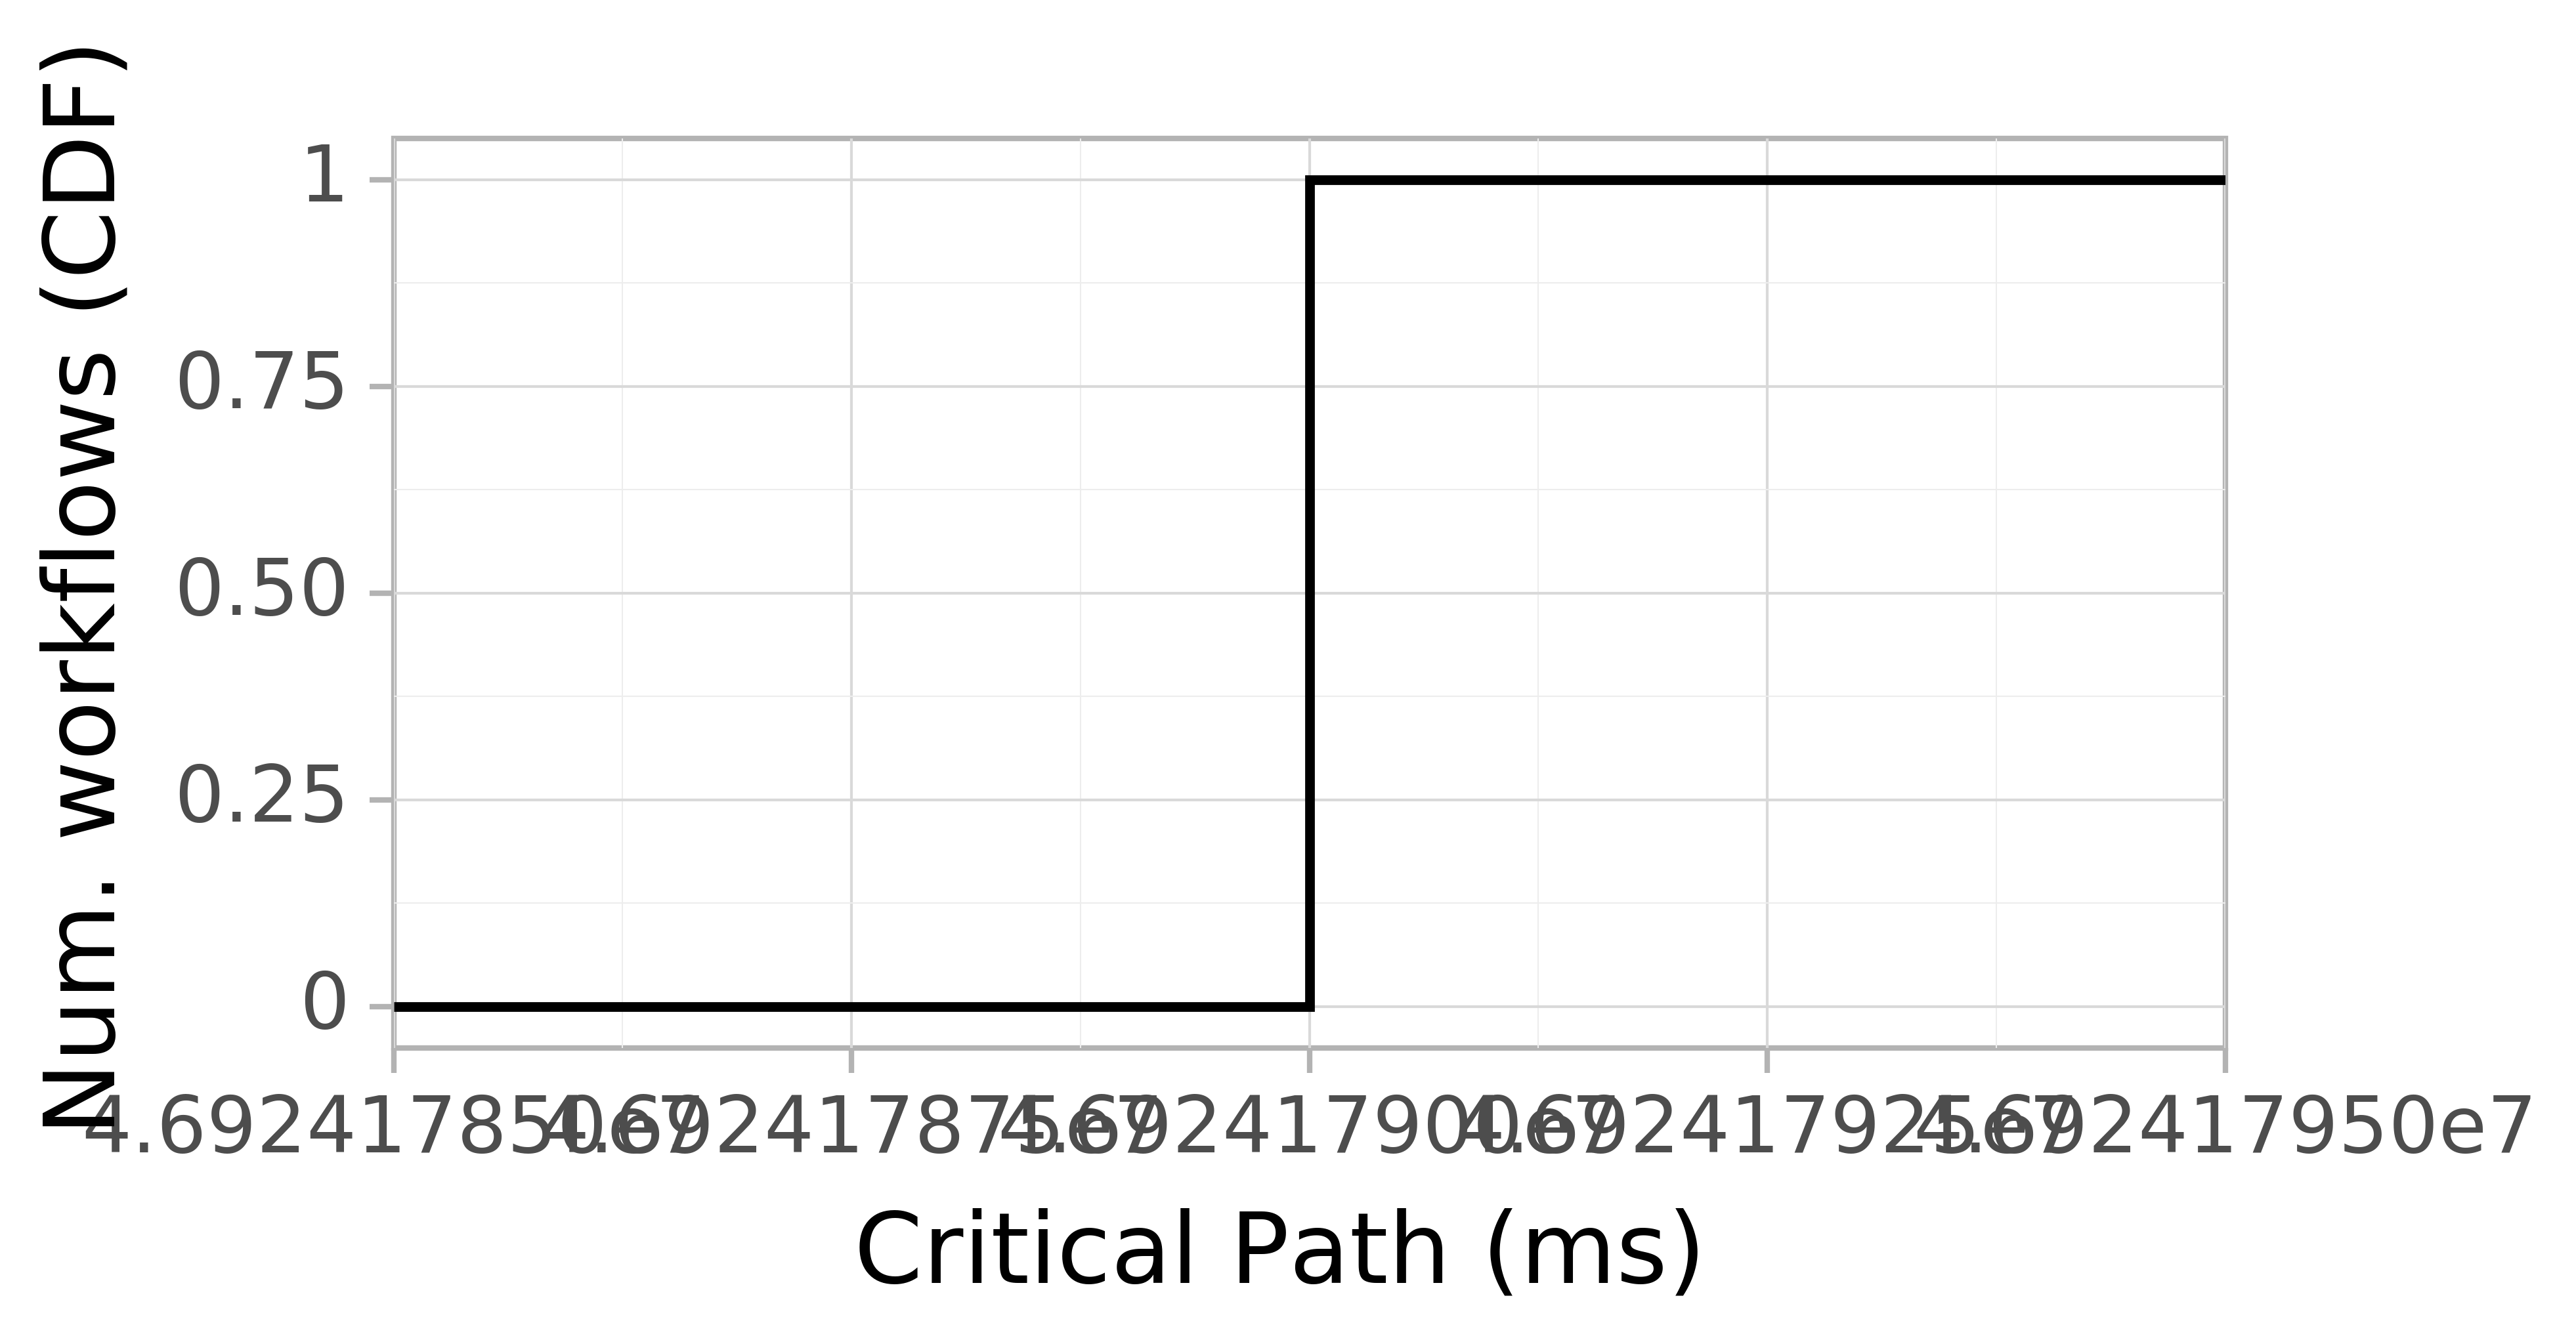 Job runtime CDF graph for the workflowhub_soykb_grid5000_schema-0-2_soykb-g5k-run002 trace.